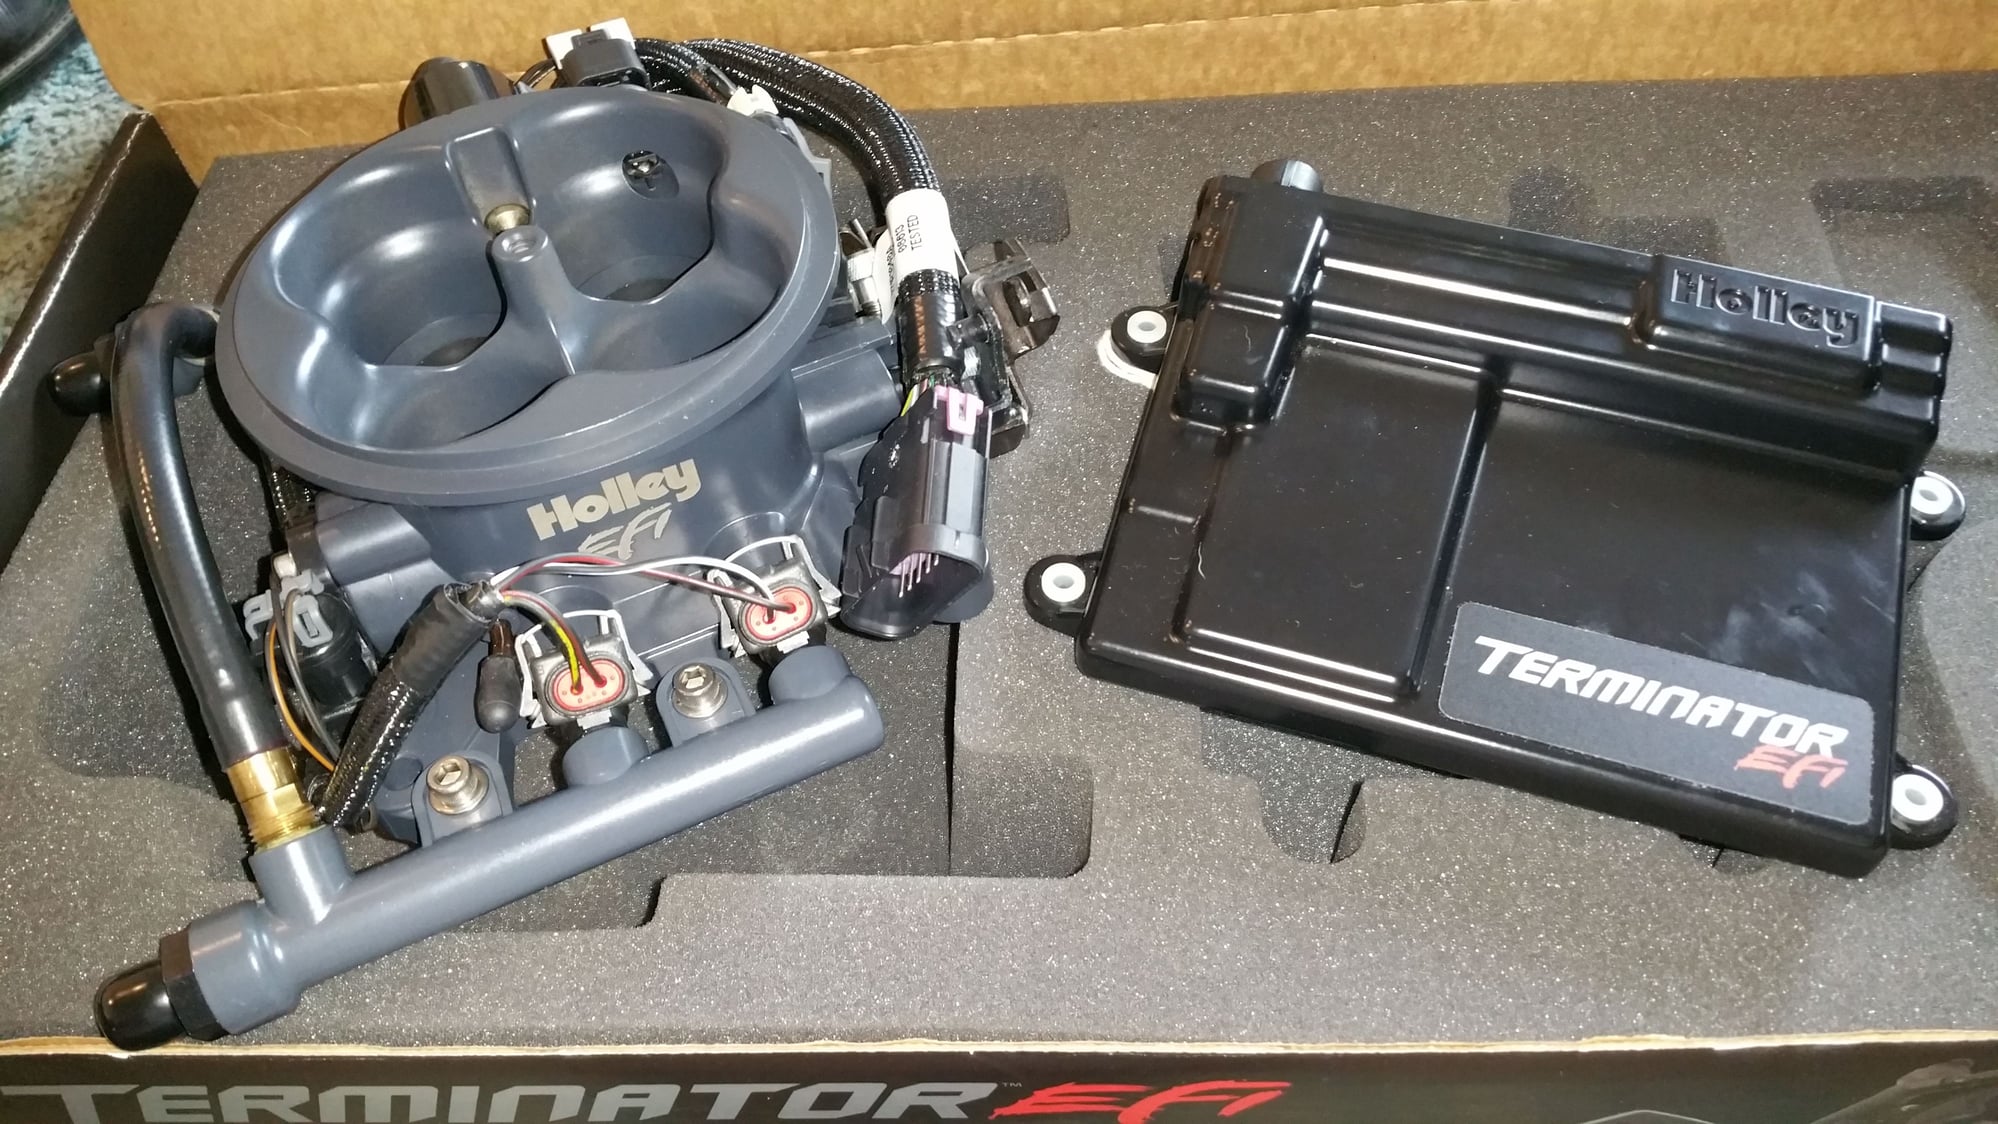  - 950cc, Autometer Tach, Nitrous Express Bottle Heater, Holley Terminator EFI & More - Sturgis, MI 49091, United States